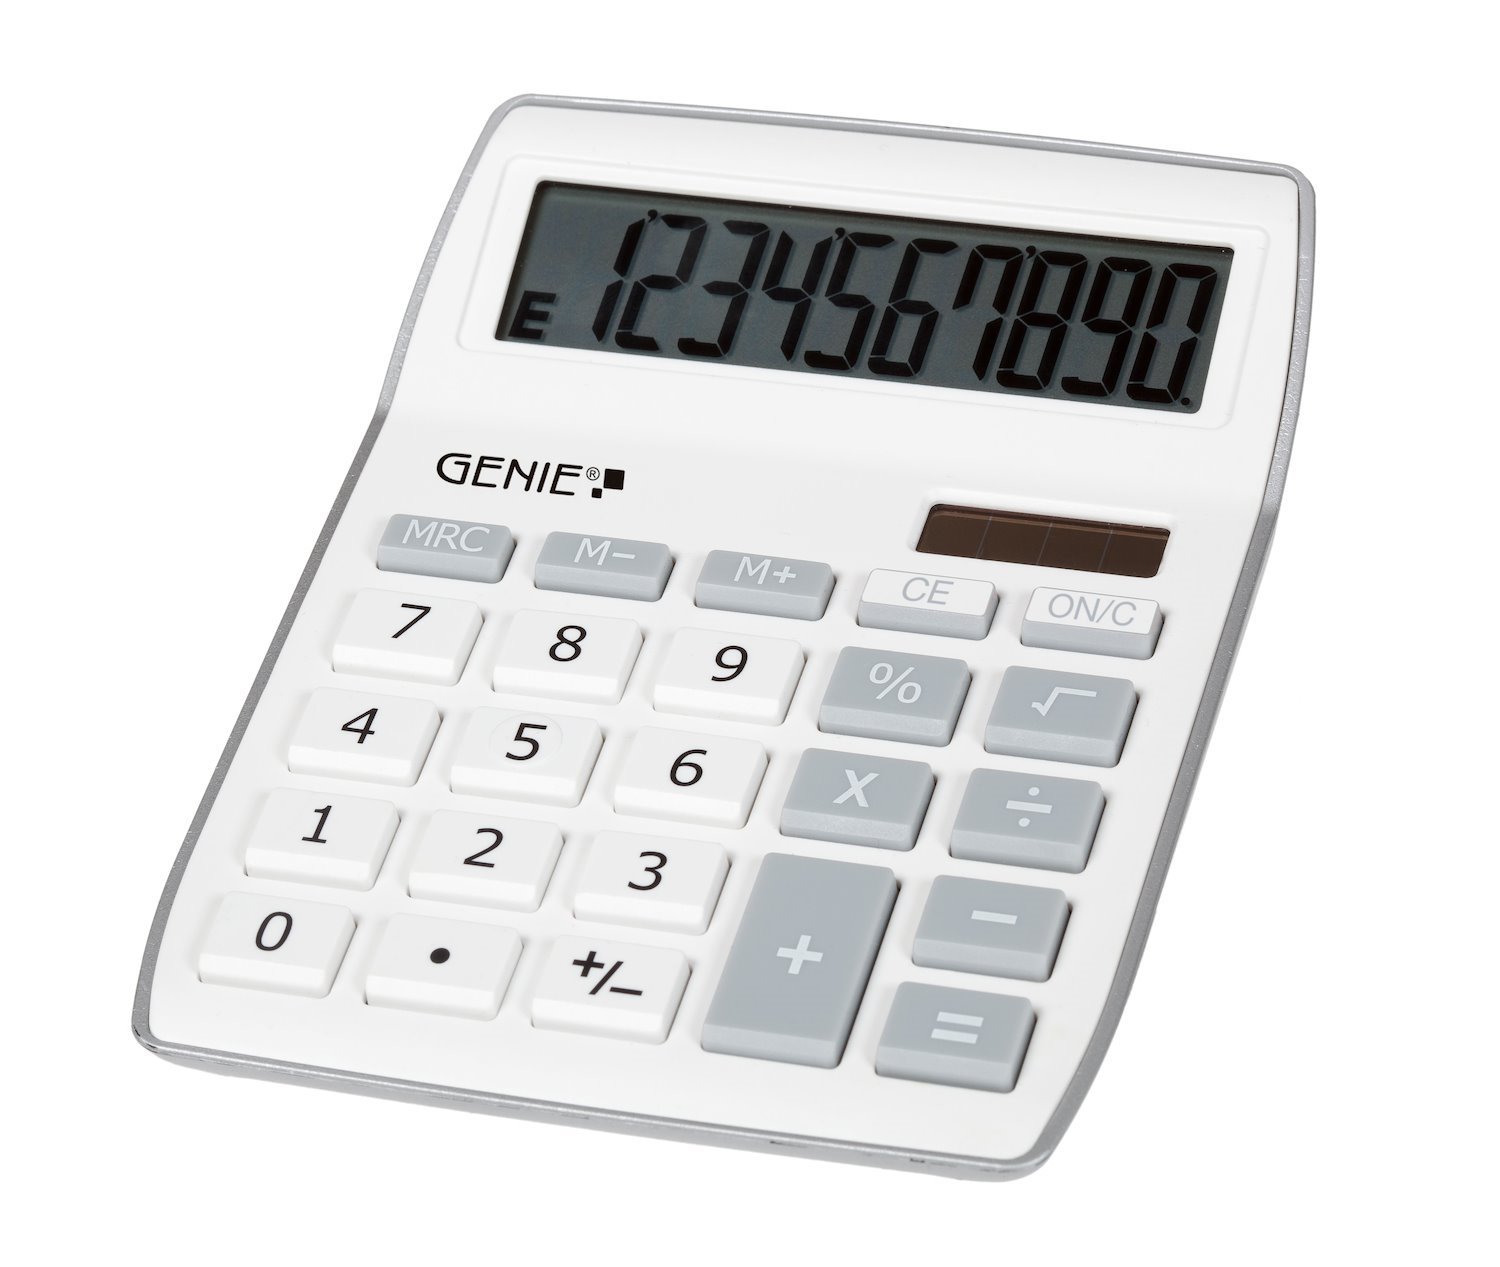 Genius Genie 840 S Calculator Desktop Display Grey White (Genie 840S 10 Digit Desktop Calculator Silver - 12262)